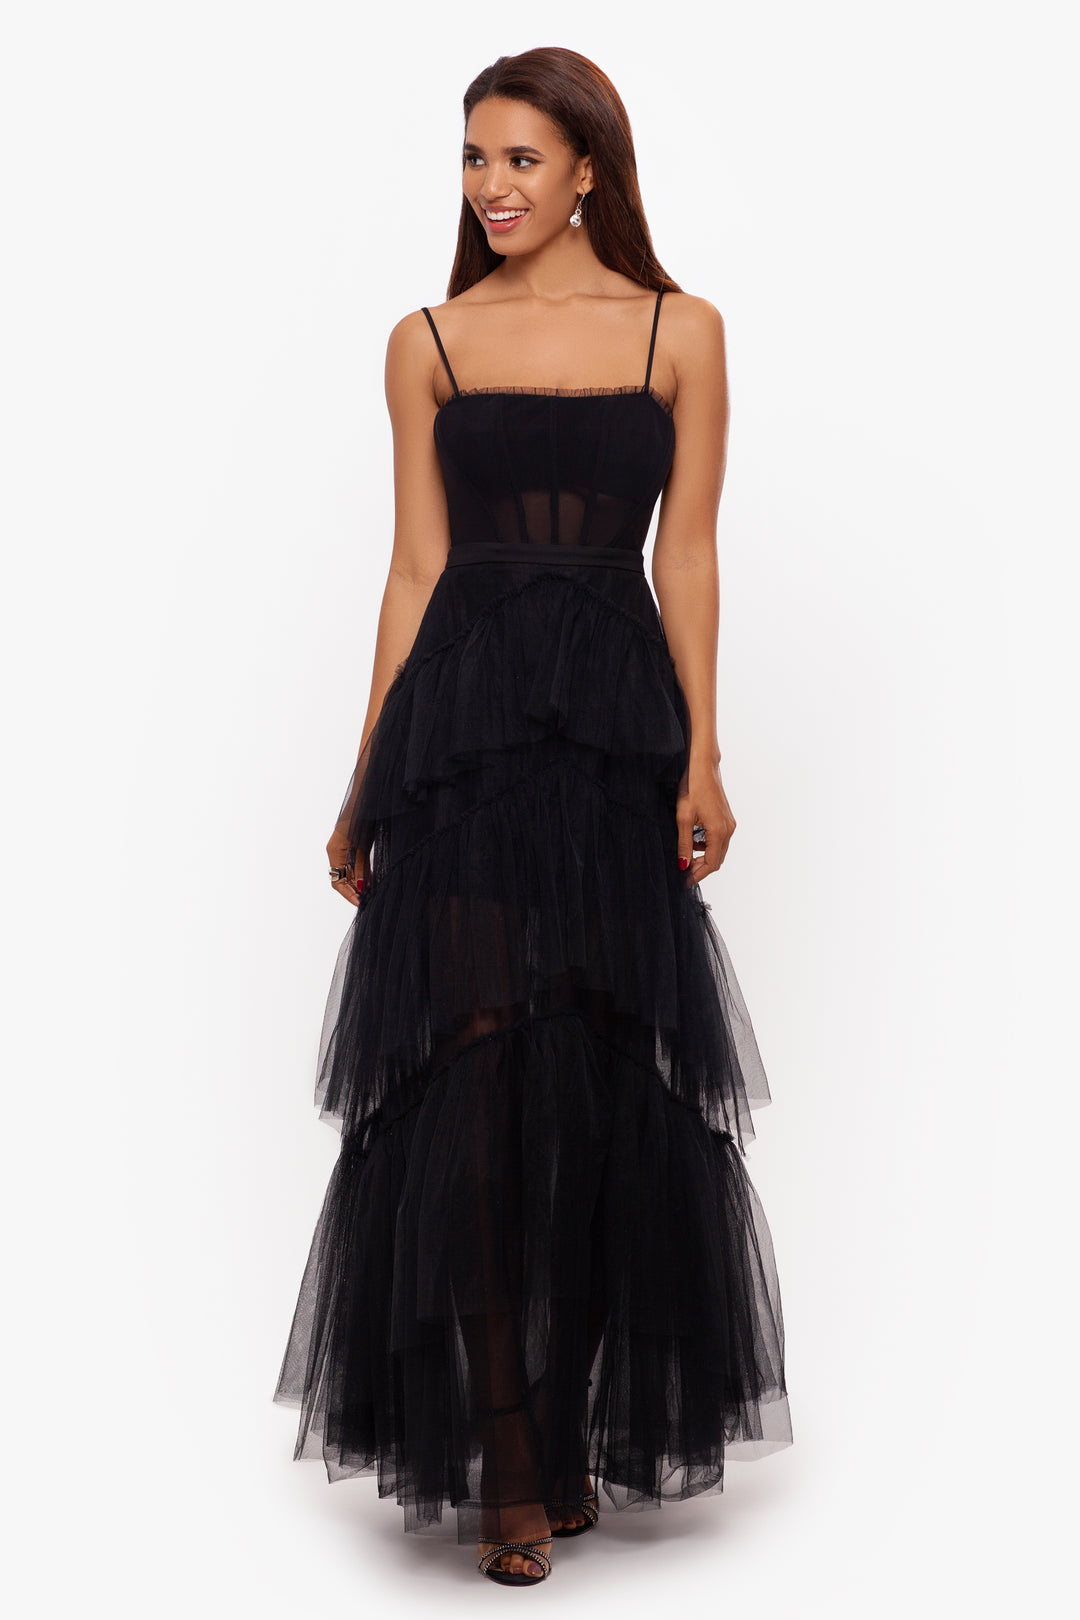 "Jasmine" Dress - A long spaghetti strap mesh corset gown with layered ruffle gatherings. 